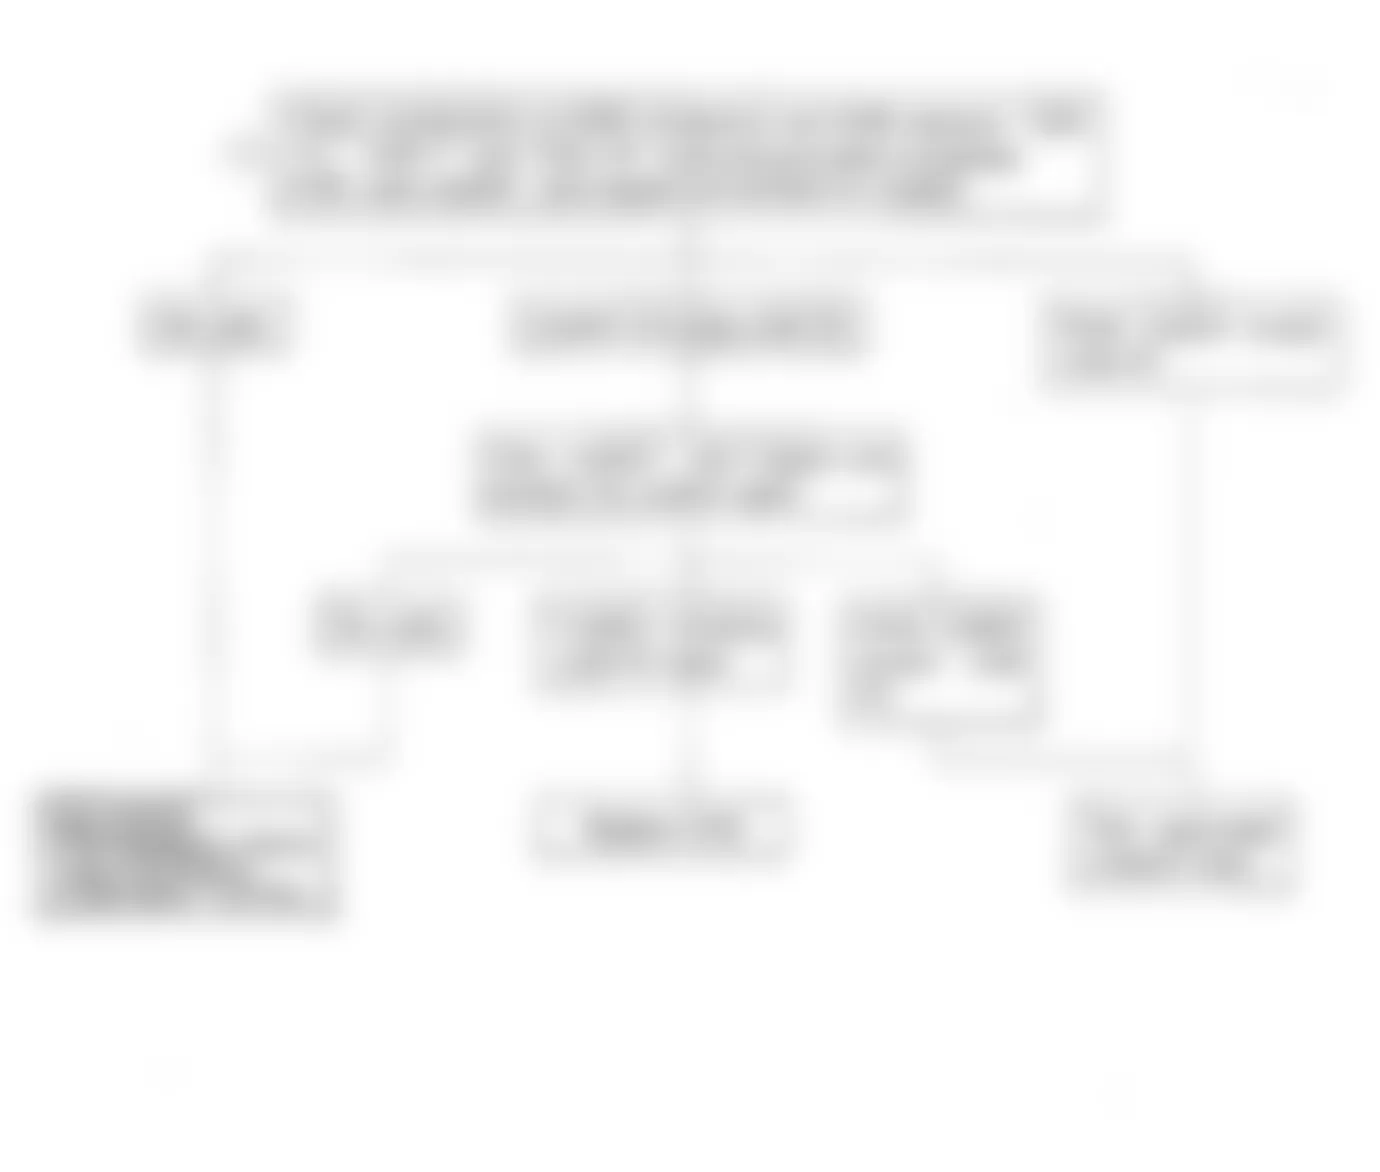 Isuzu Amigo XS 1991 - Component Locations -  Code No. 52 Flow Chart, Faulty ECM Ram